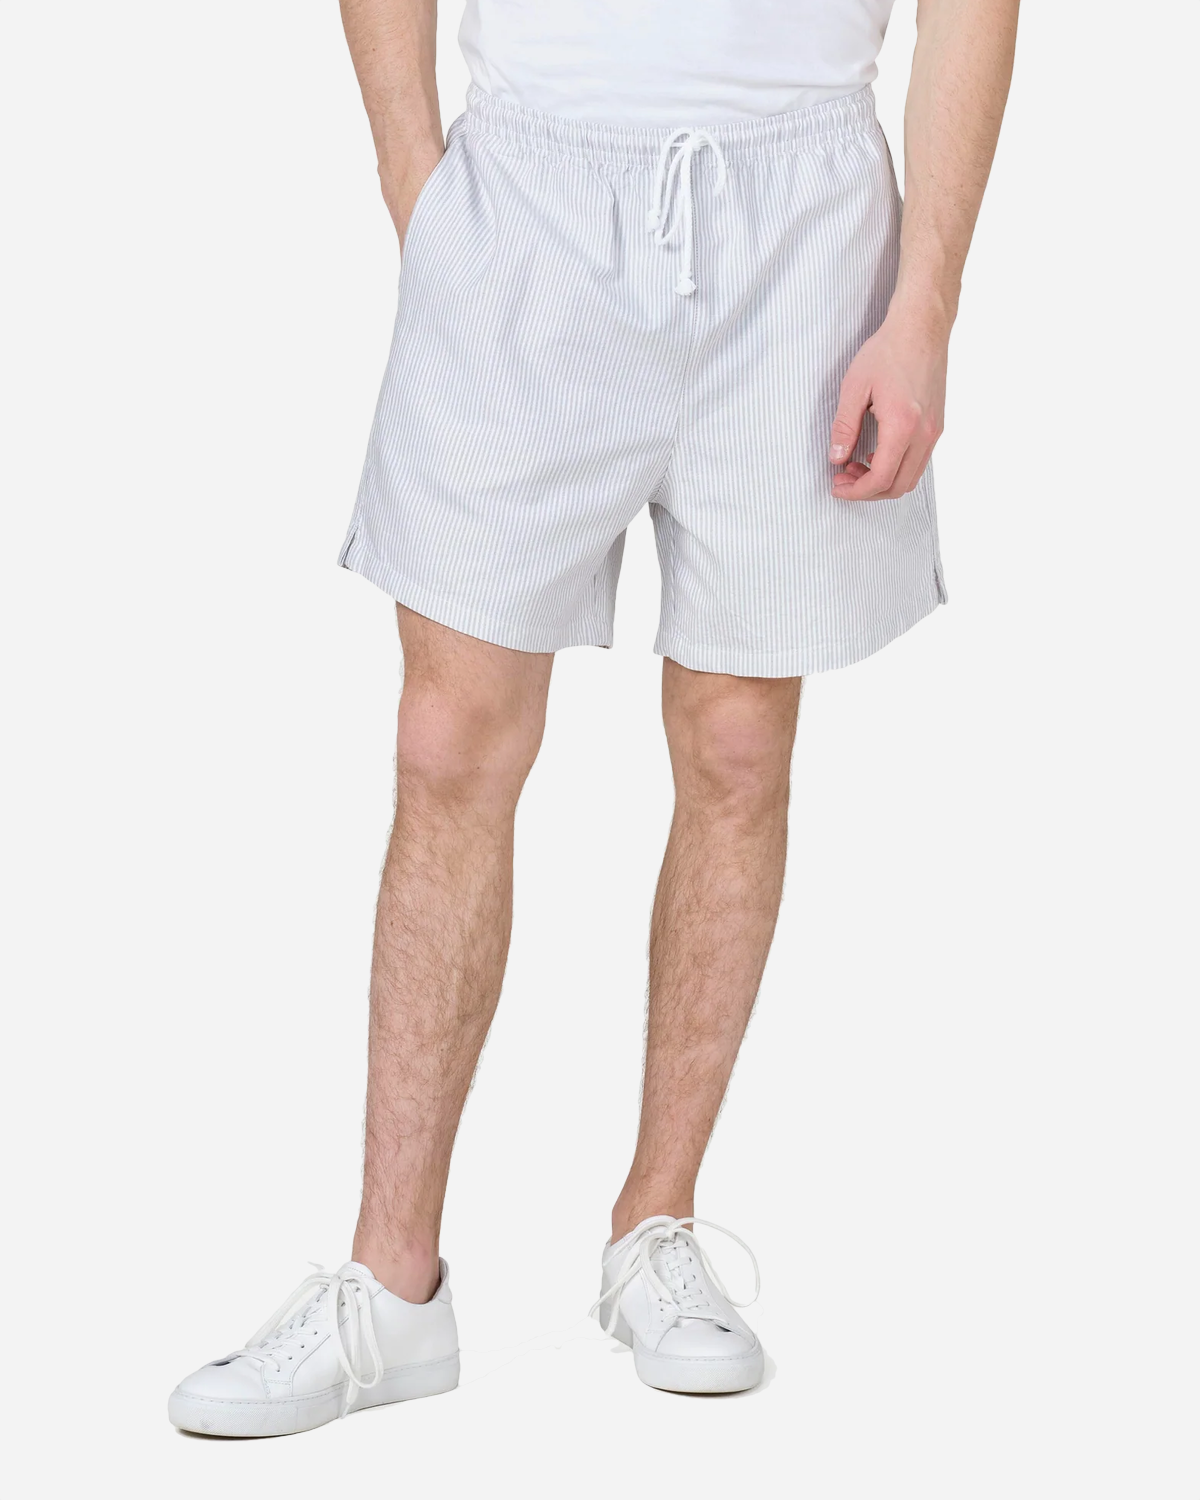 Bertram Shorts - White/Sand